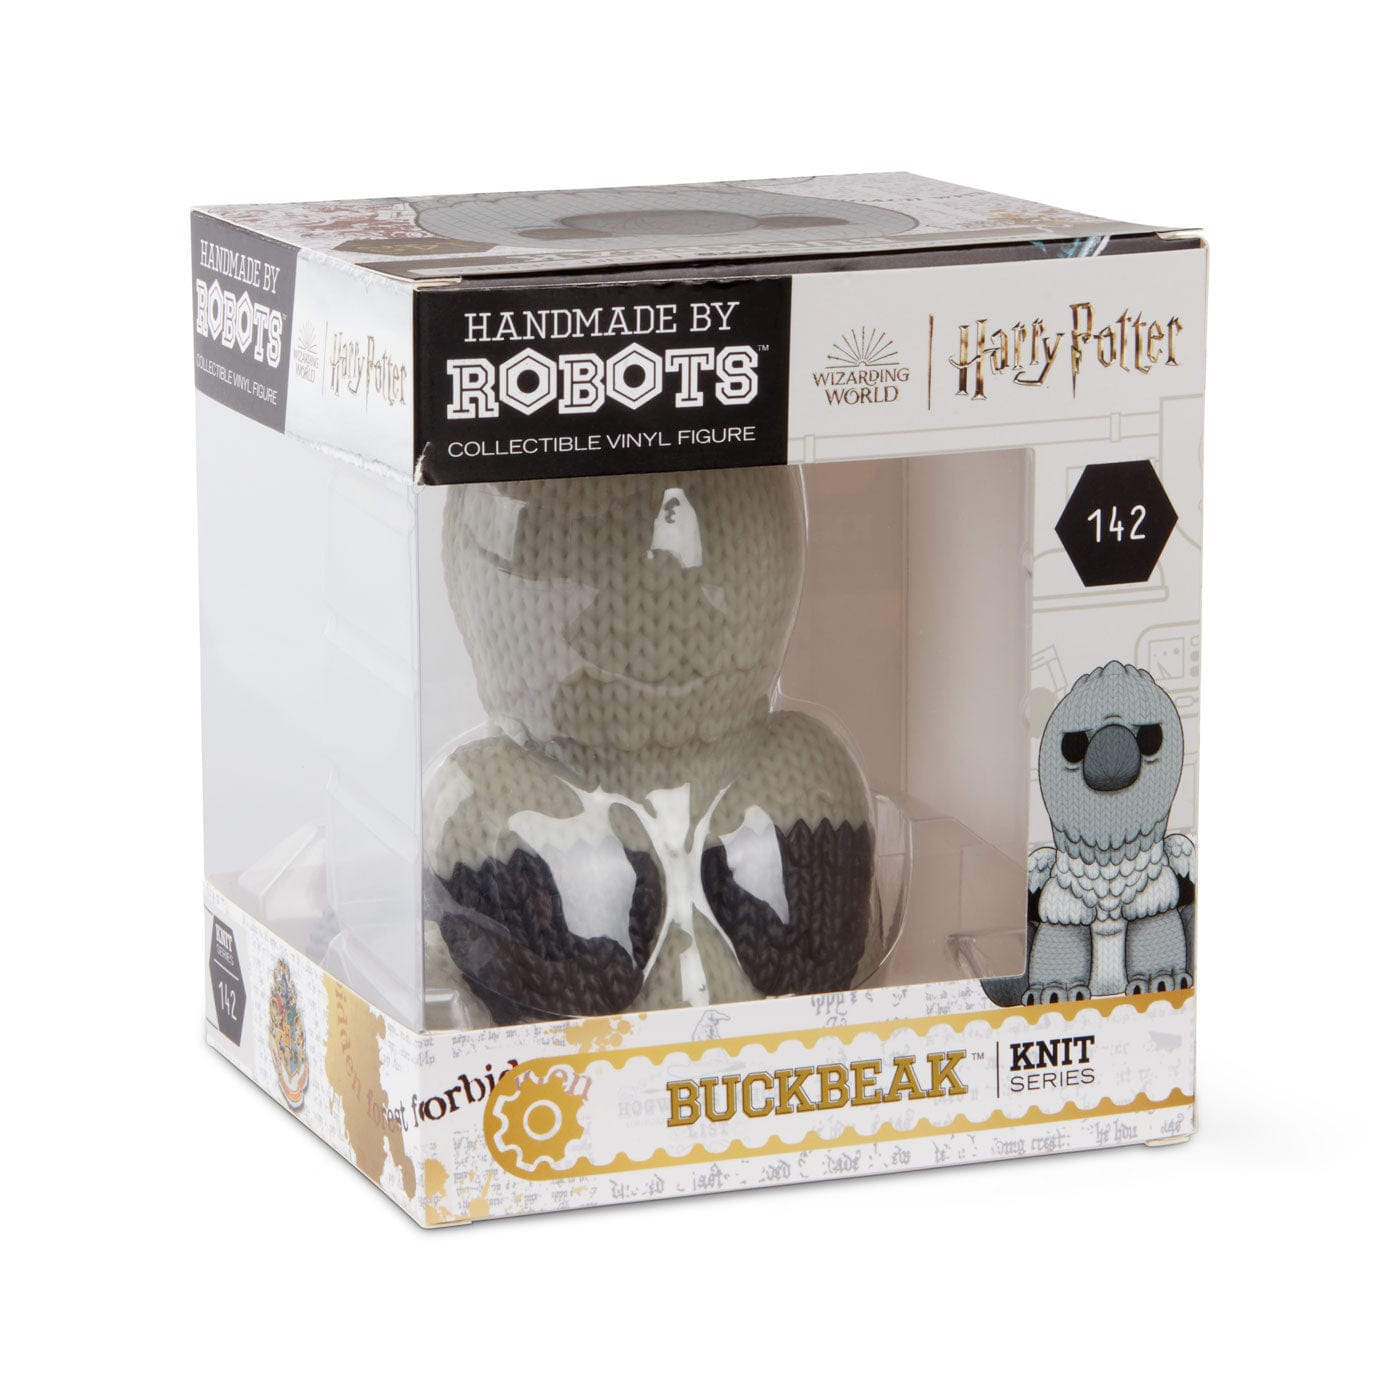 Buckbeak #142 - Harry Potter - Handmade by Robots - Limited Edition